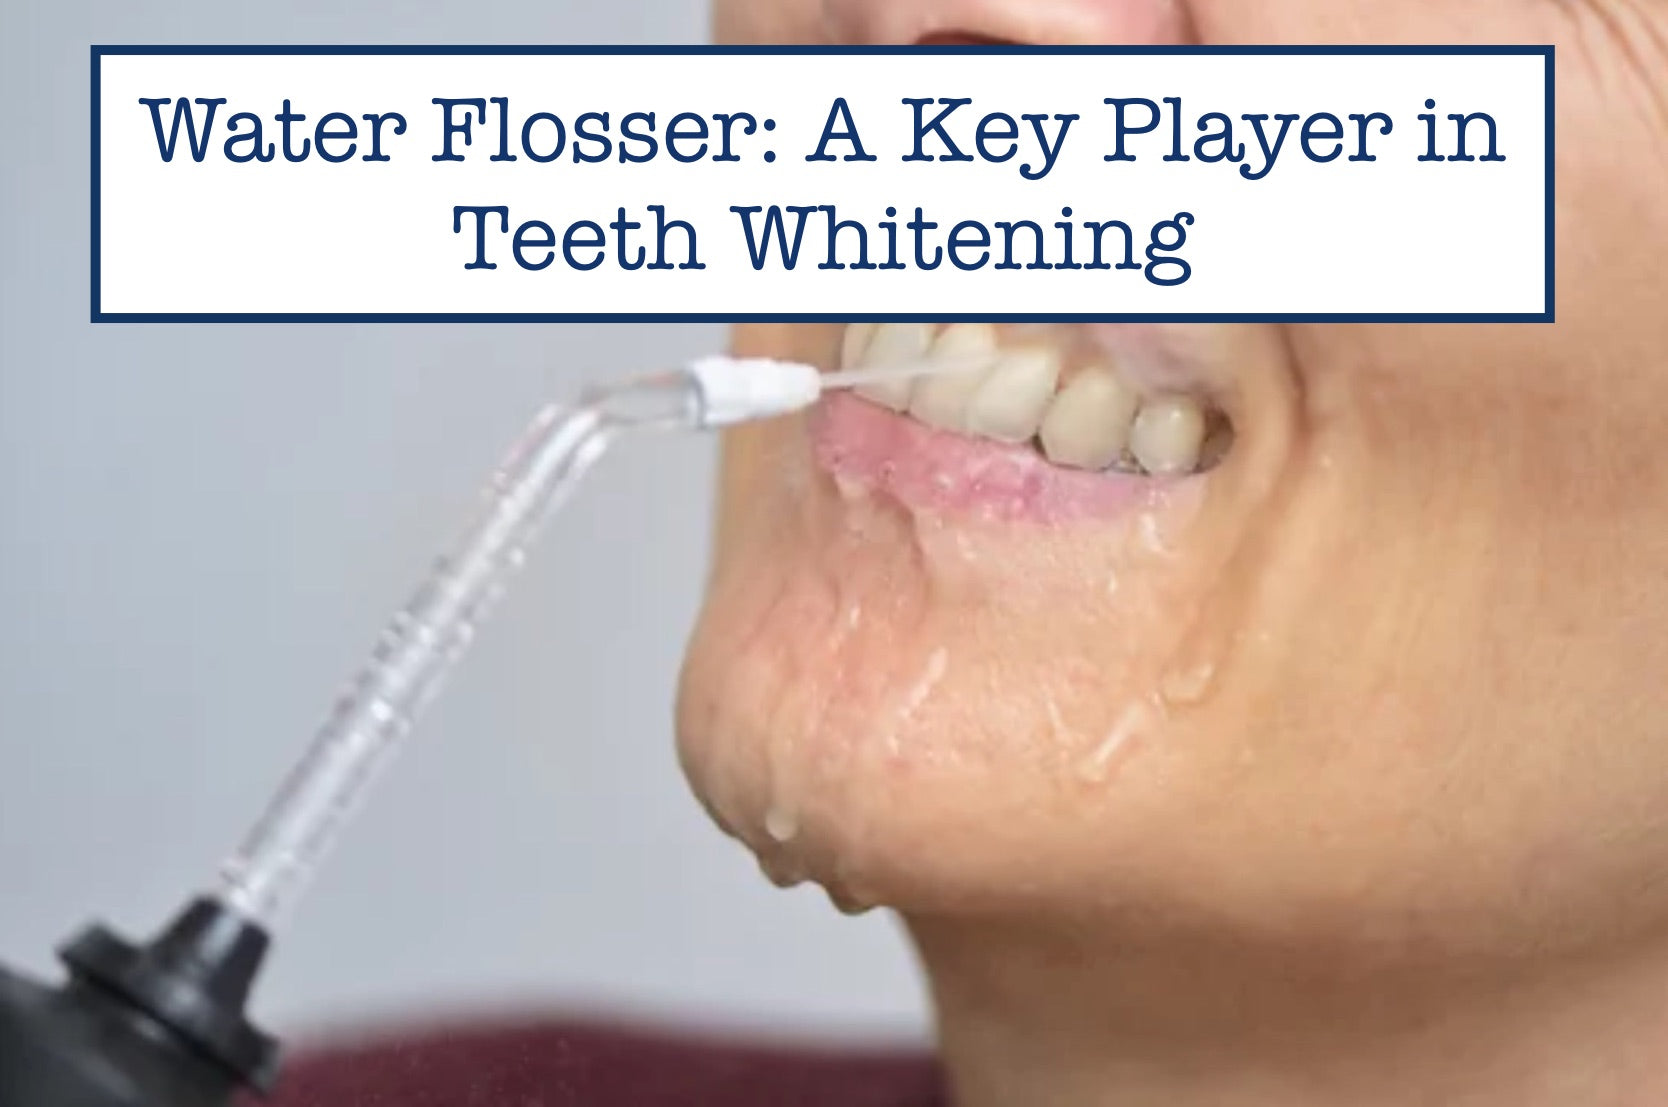 Water Flosser: A Key Player in Teeth Whitening